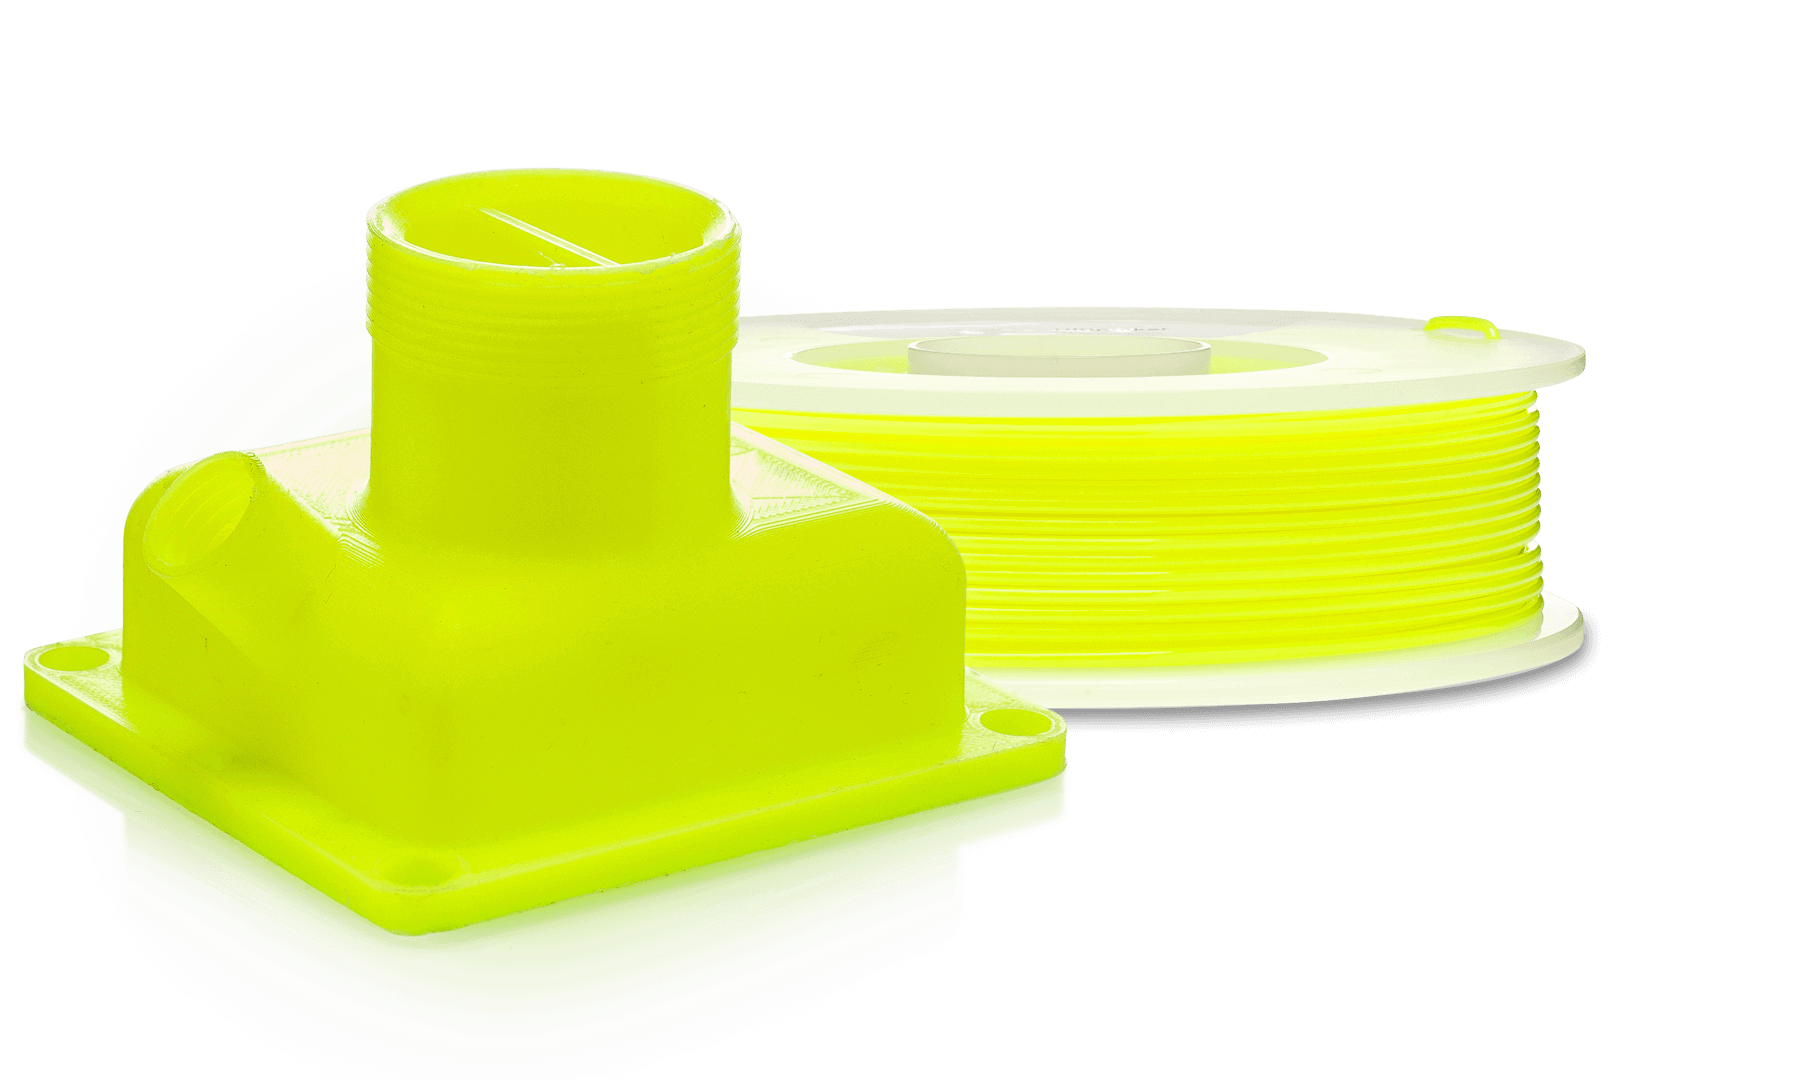 Ultimaker PETG light Yellow filament prints